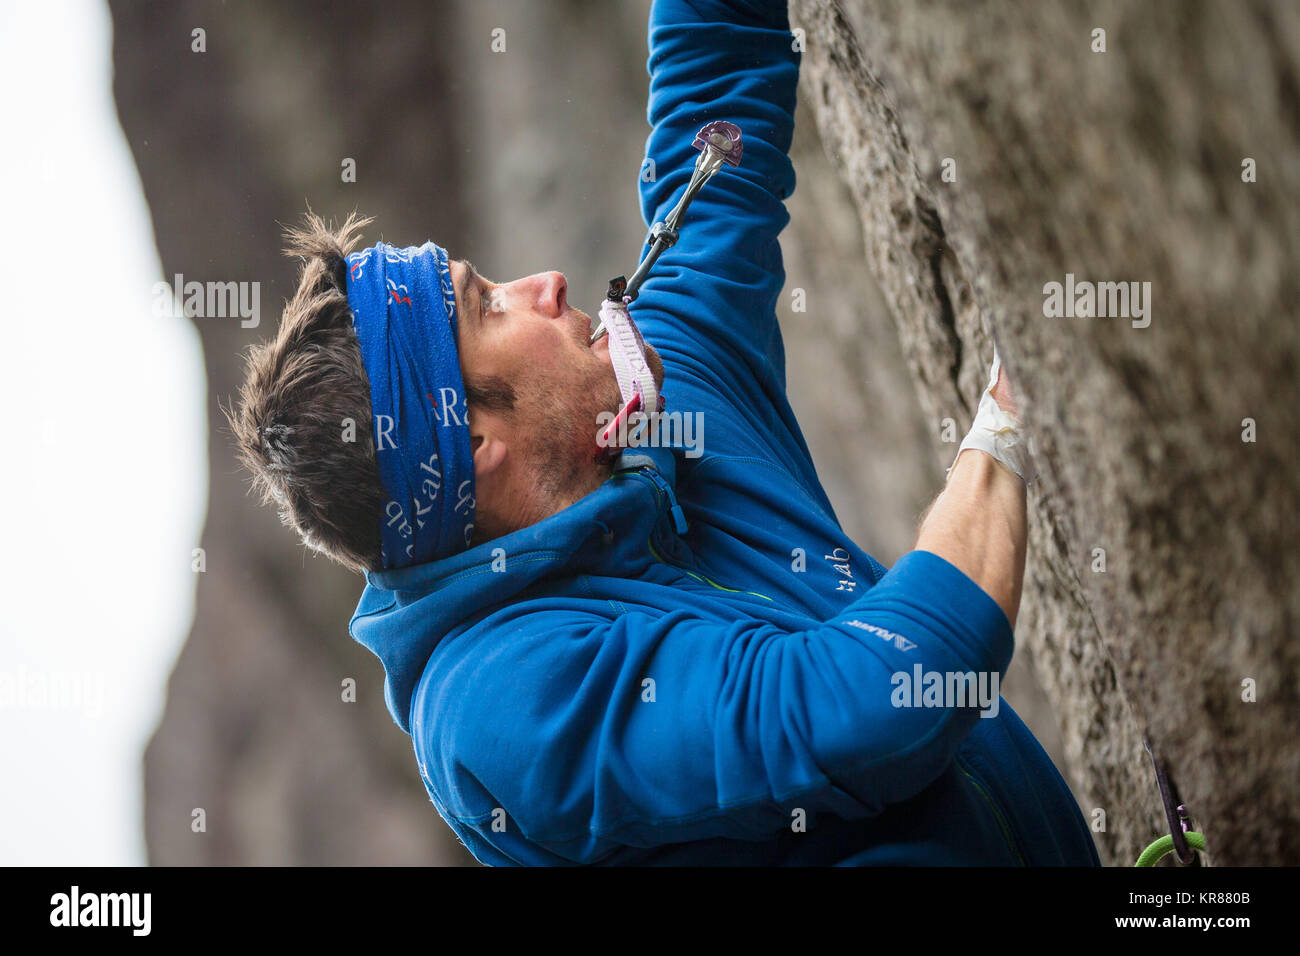 Trad Rock Climbing in Norway Stock Photo